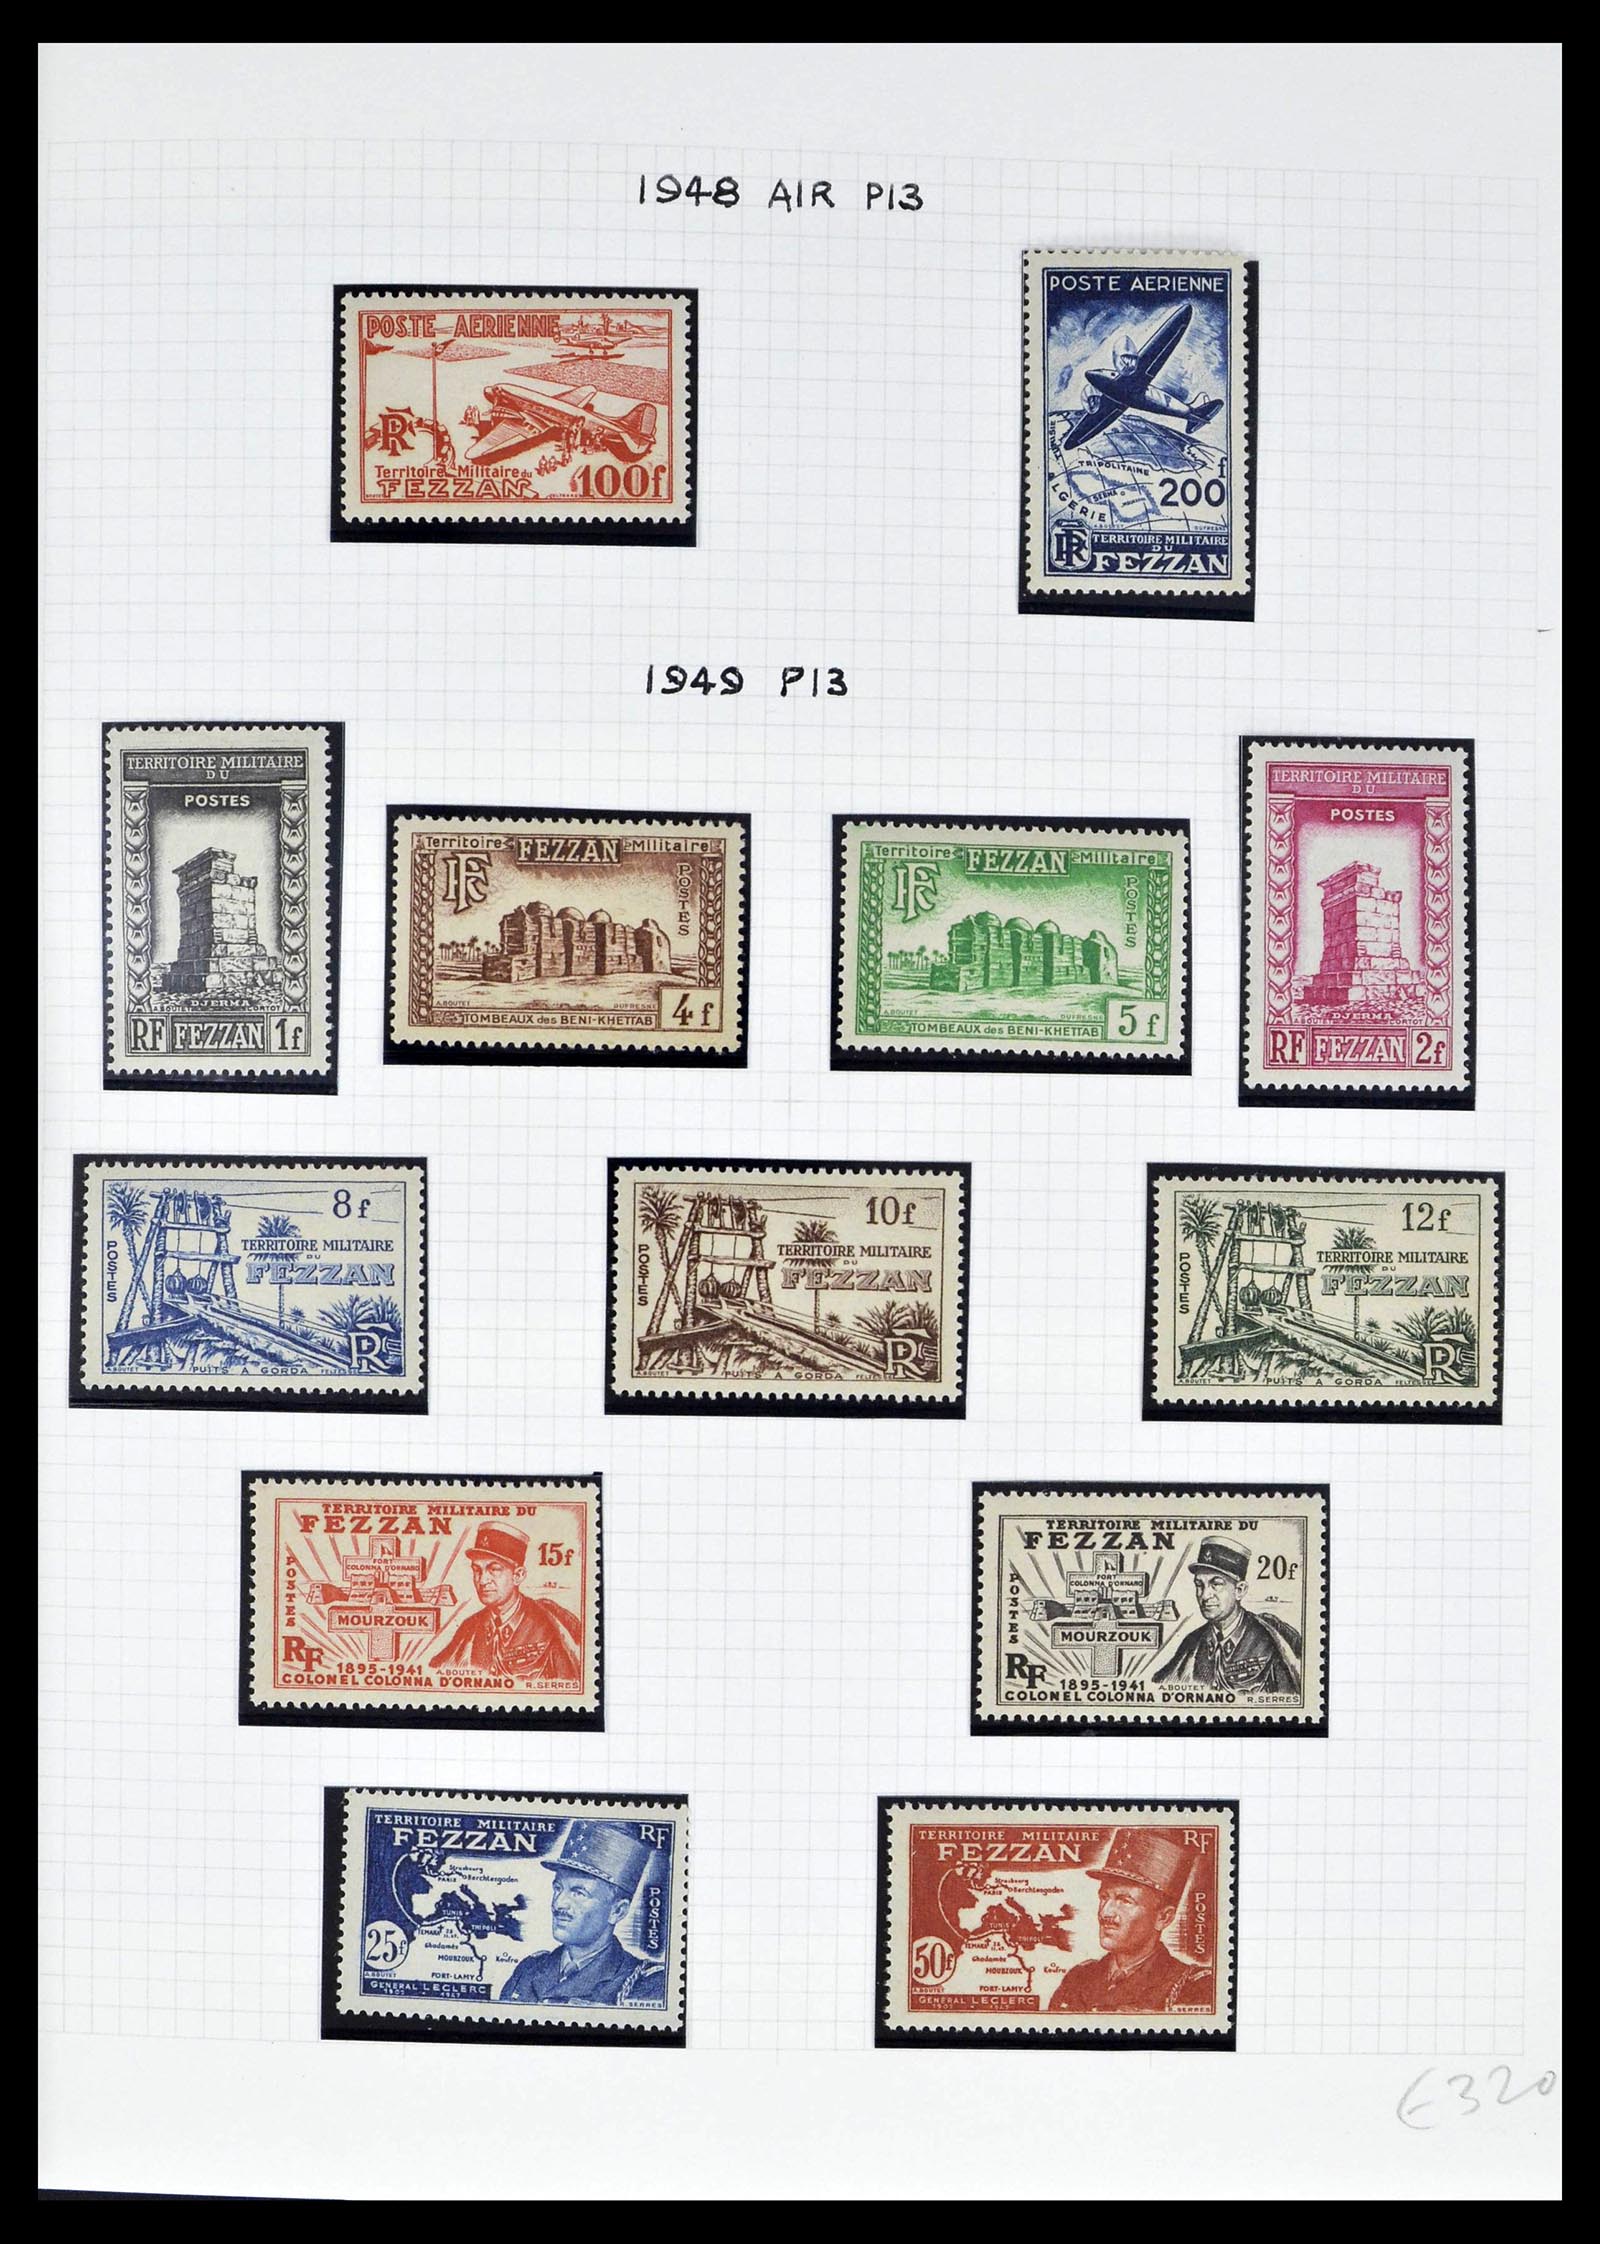 39053 0005 - Stamp collection 39053 Fezzan/Ghadames 1943-1951.